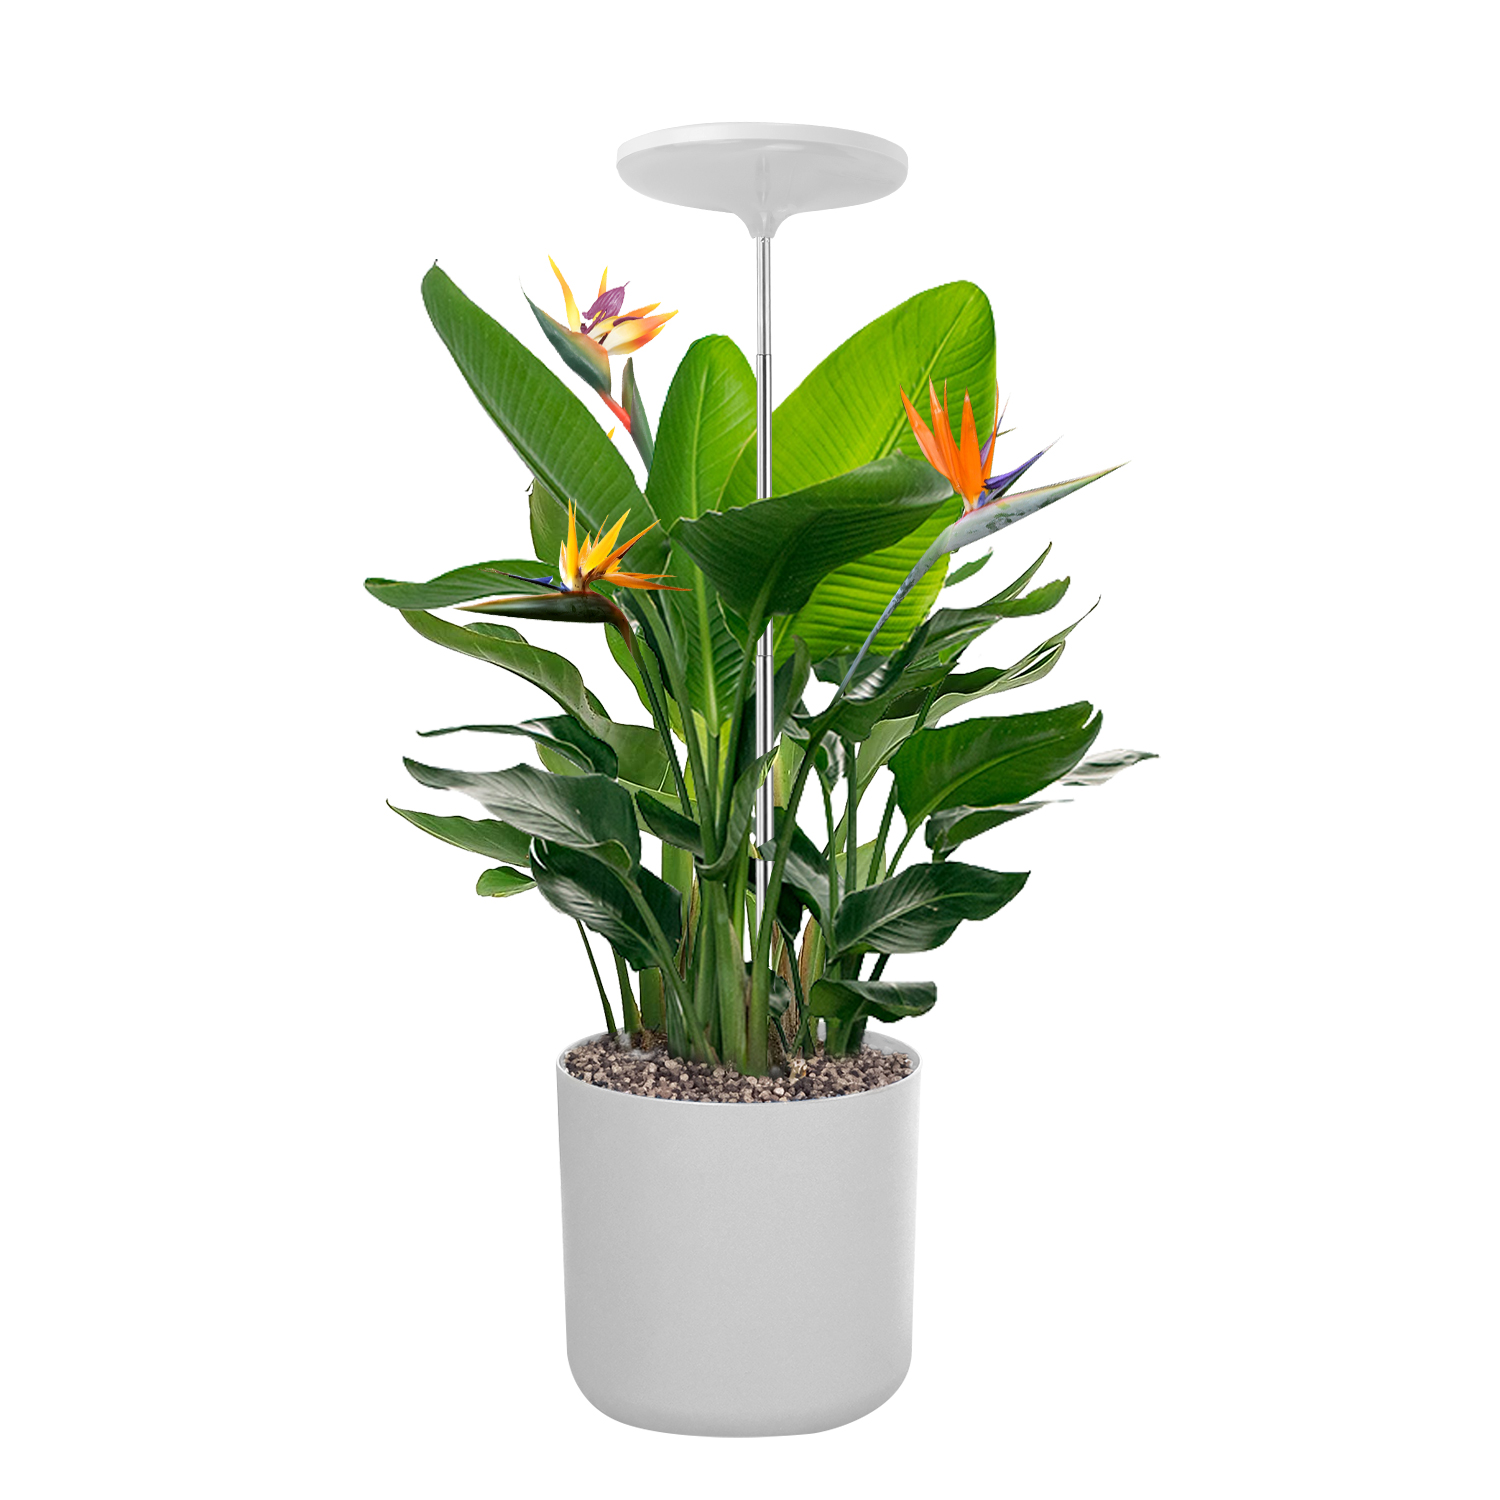 TG004 מקורה חכם לגידול אור צמח מנורת גן גידול אורות אורות צמחים דקורטיביים